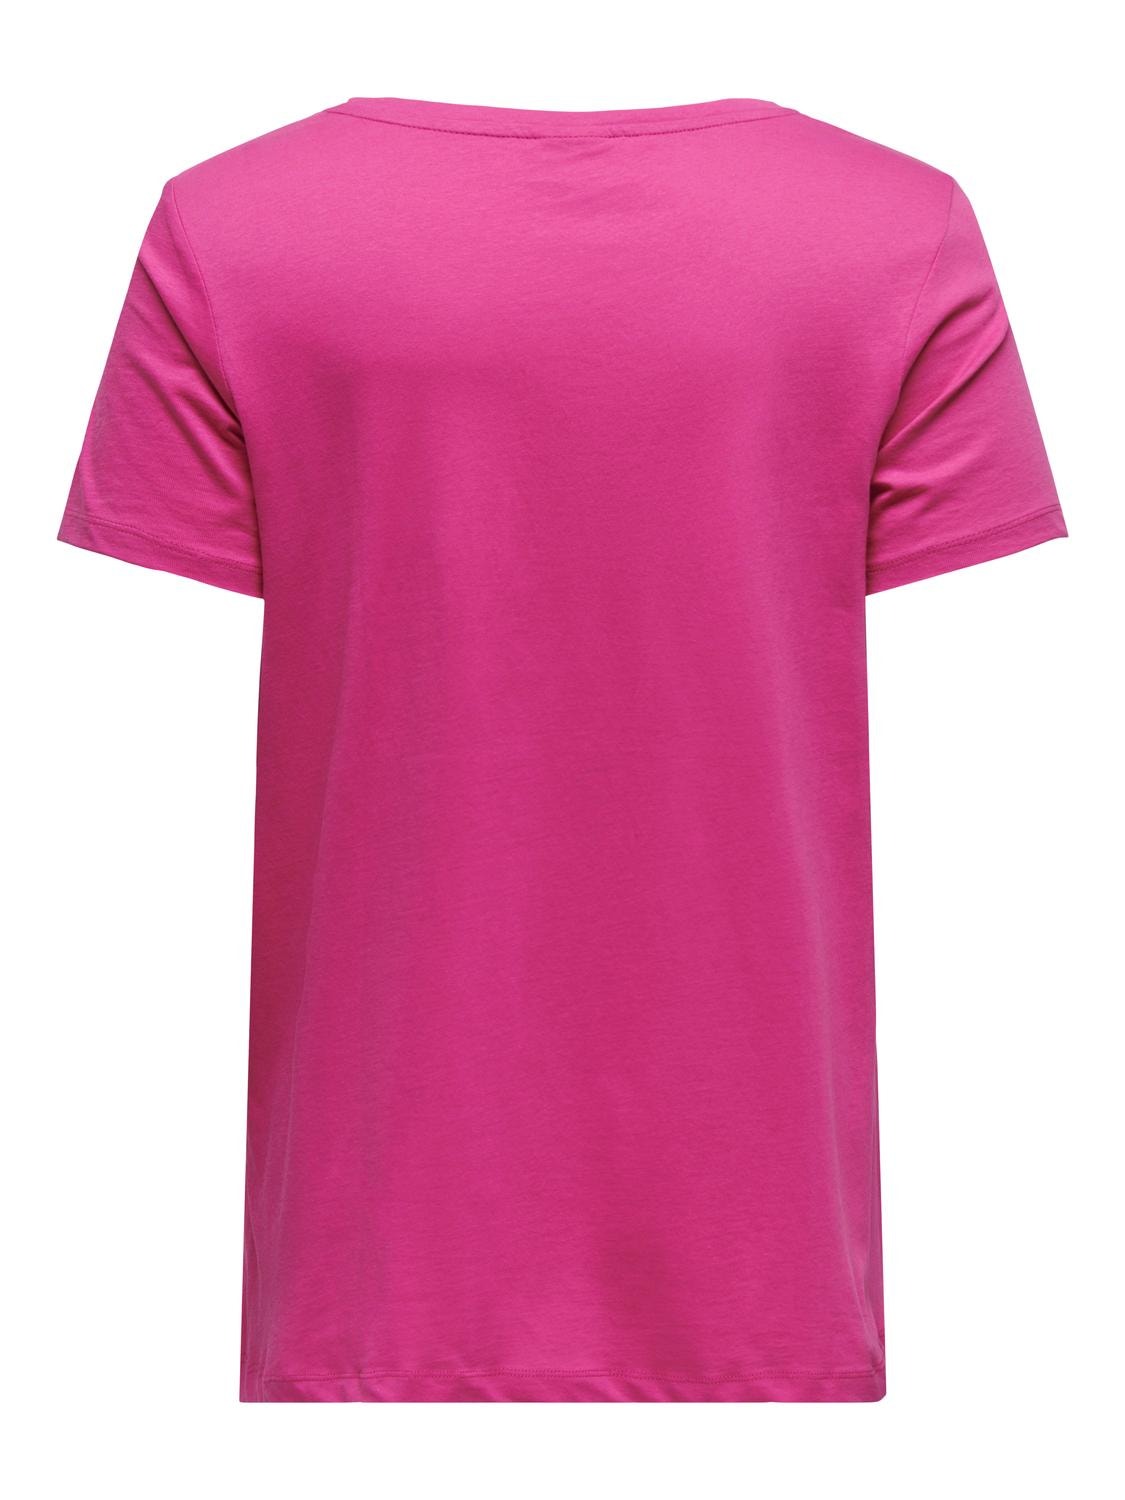 ONLY Curvy V-neck t-shirt -Raspberry Rose - 15298452